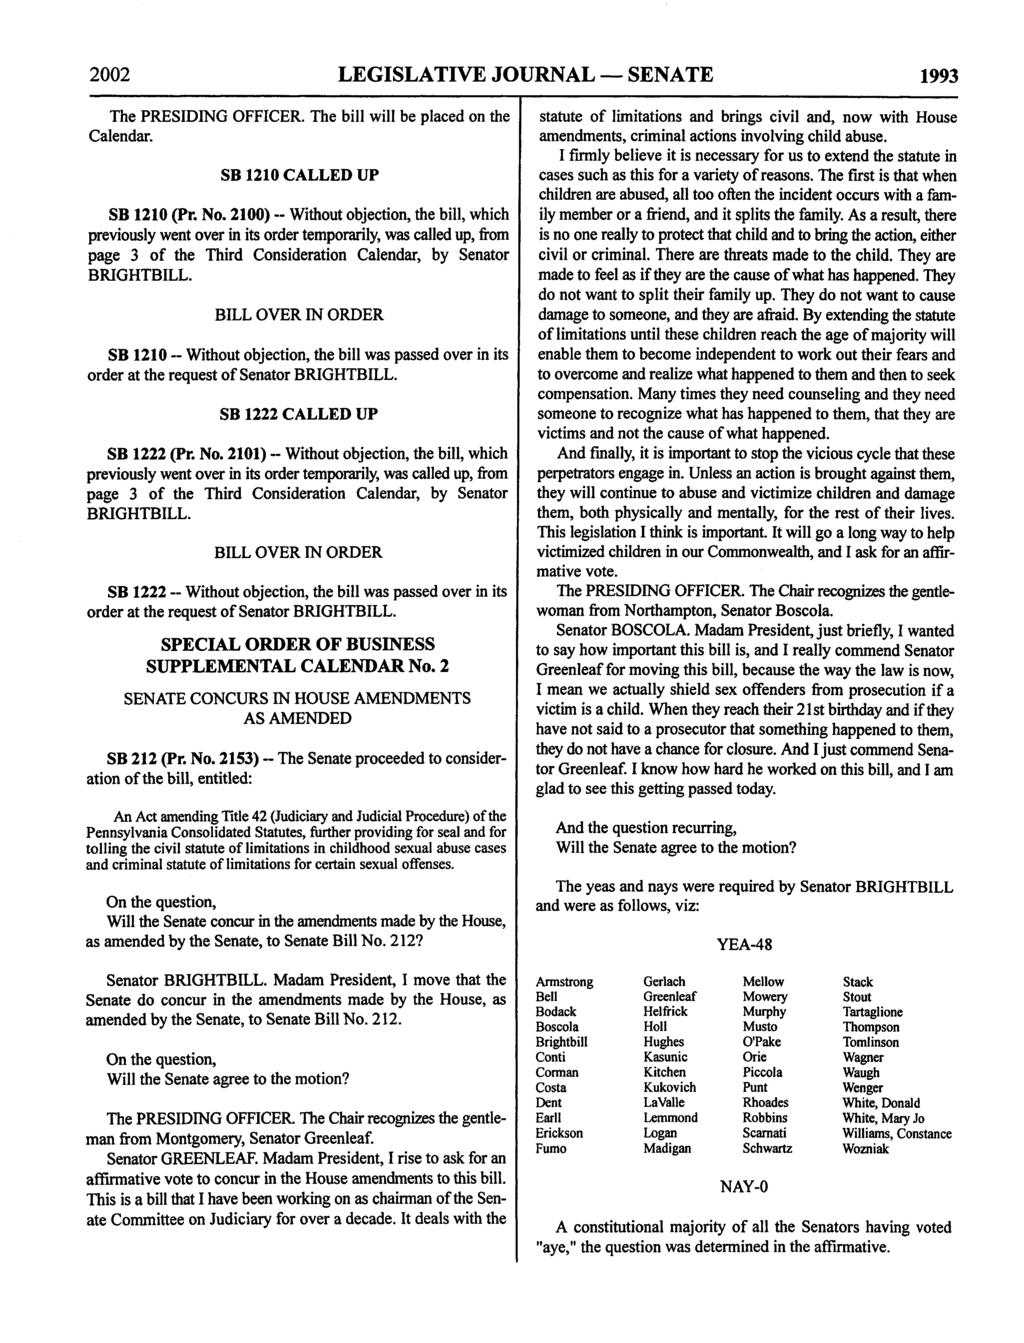 2002 LEGISLATIVE JOURNAL SENATE 1993 The PRESIDING OFFICER. The bill will be placed on the Calendar. SB 1210 CALLED UP SB 1210 (Pr. No.